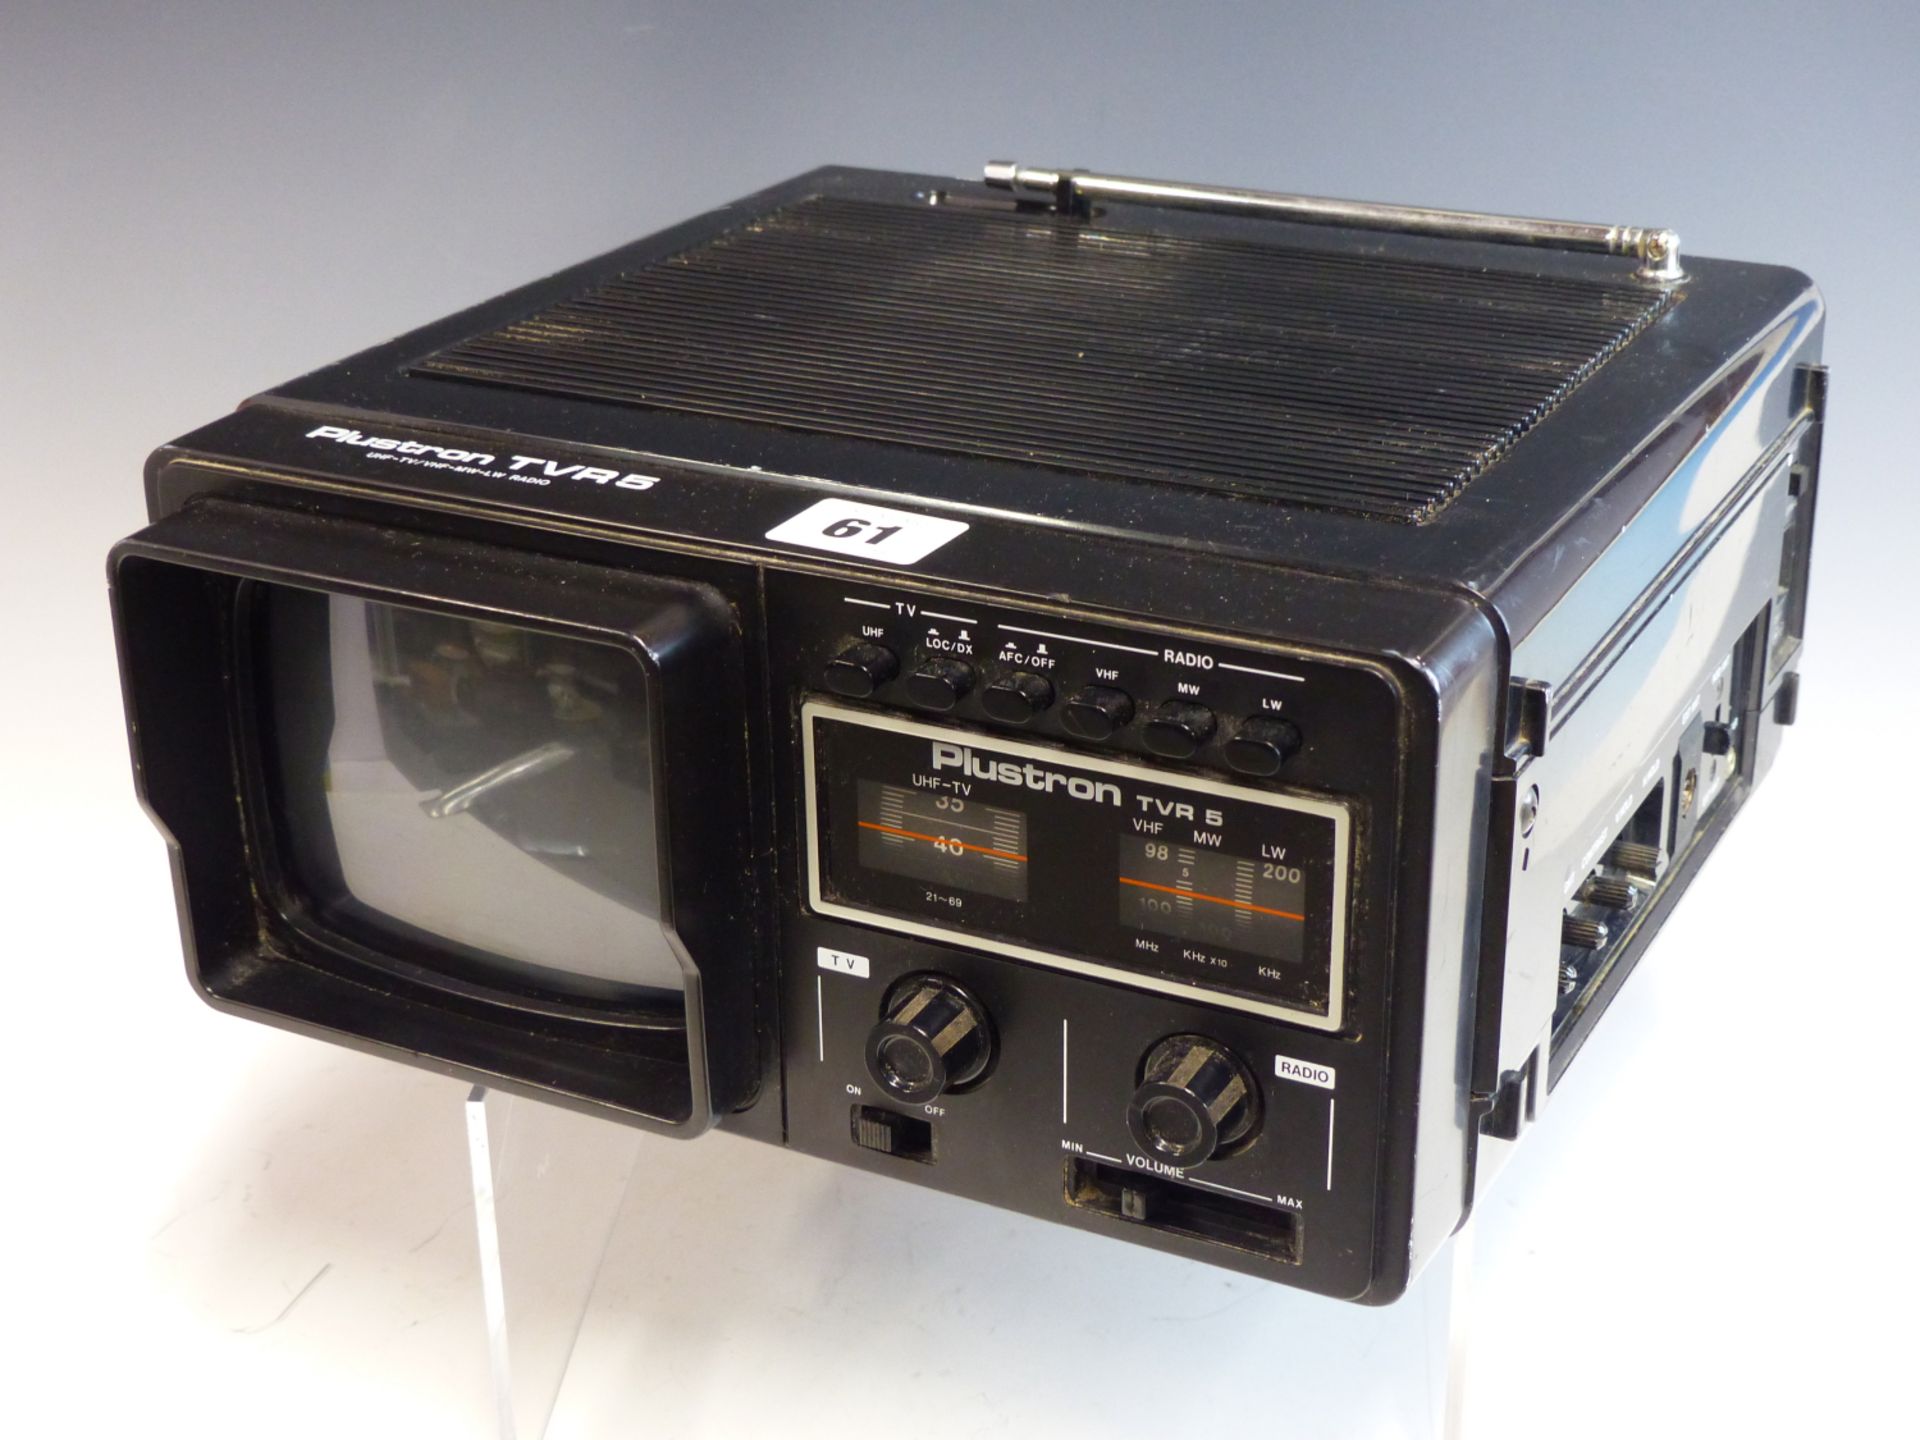 A RETRO VINTAGE PLUSTRON TVR 5 PORTABLE TV RADIO. - Image 2 of 5